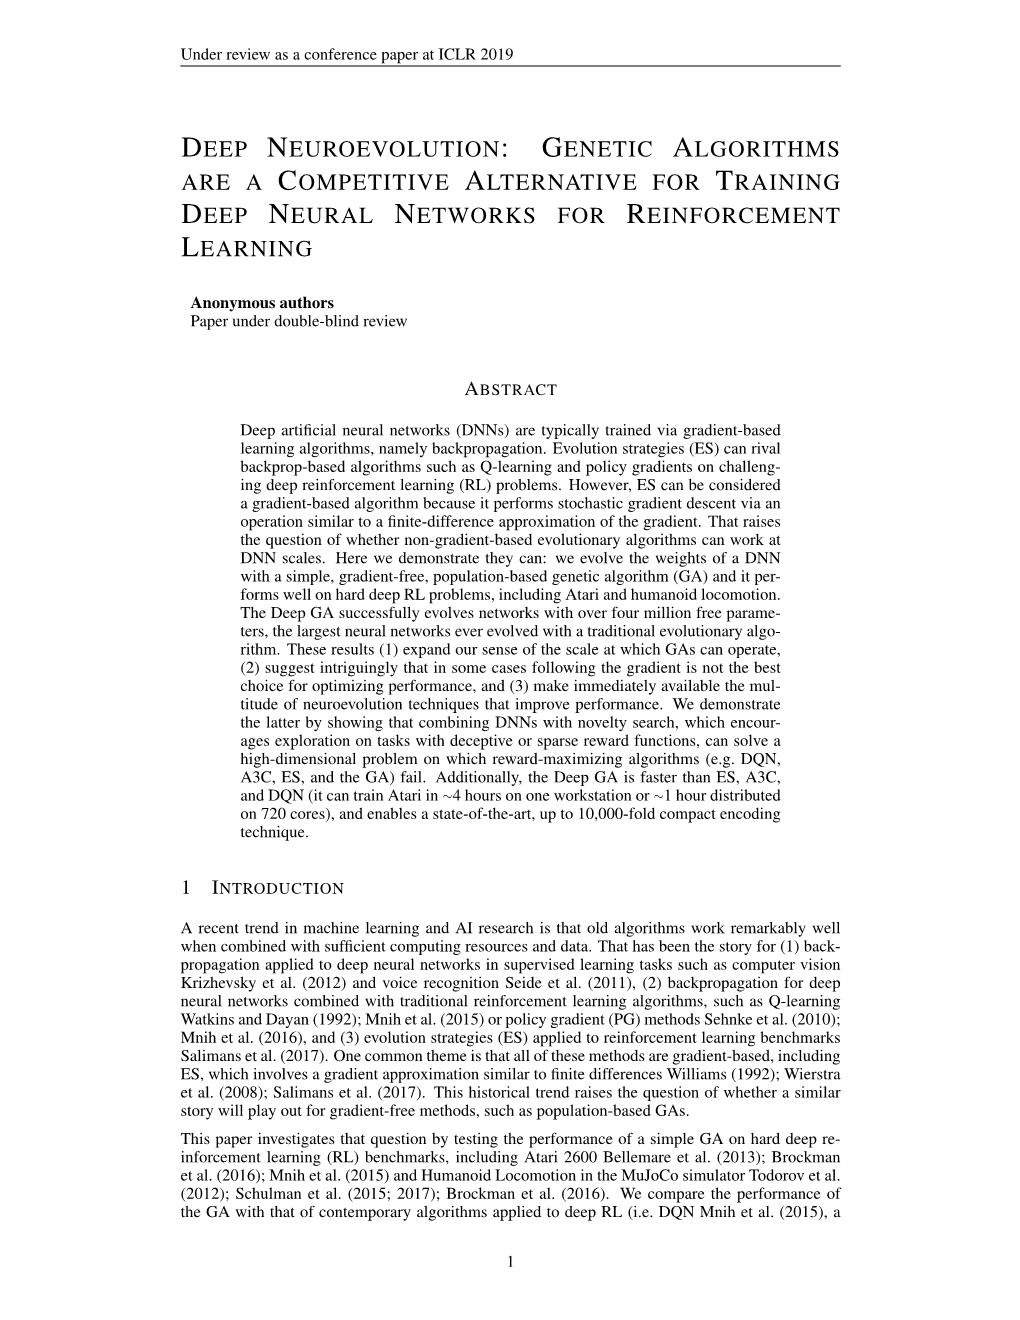 Genetic Algorithms Area Competitive Alternative for Training Deep Neural Networksfor Reinforcement Learning